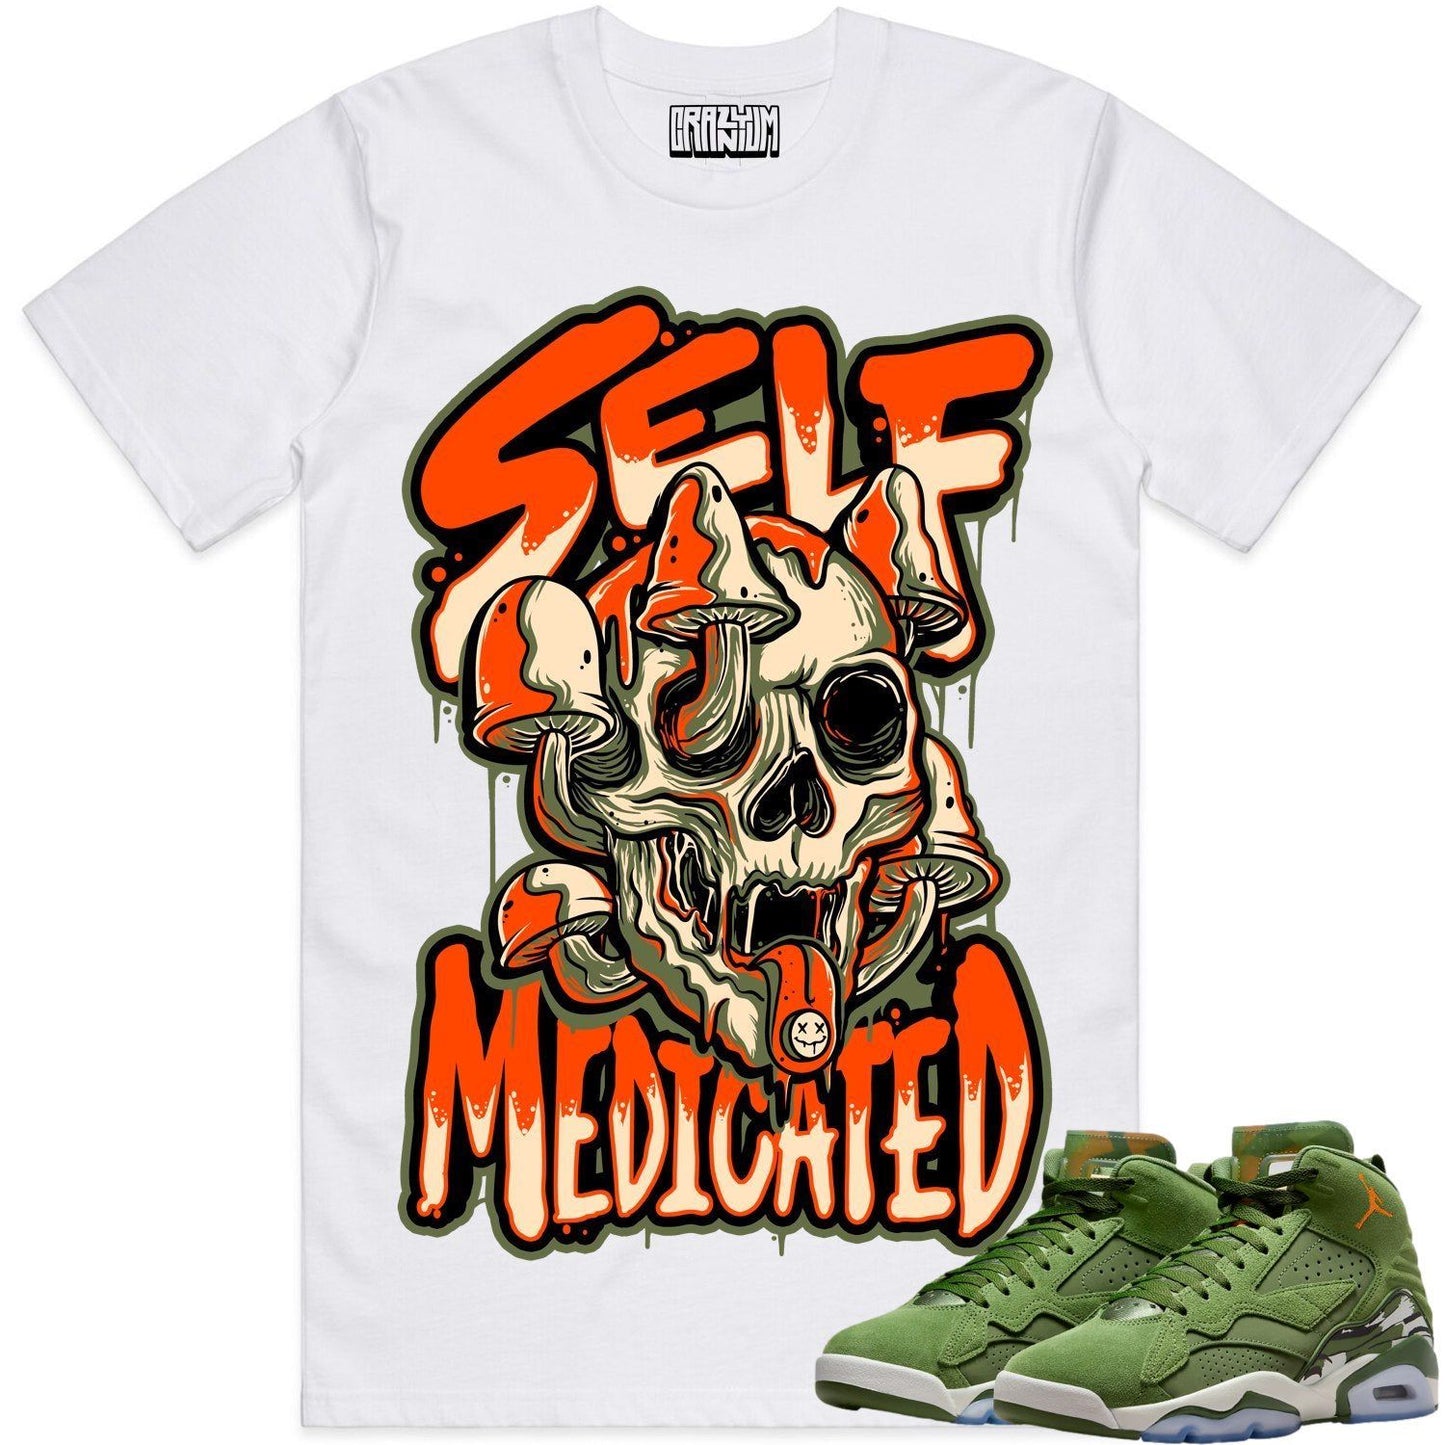 Jordan MVP Sky J Olive Shirts - Self Medicated